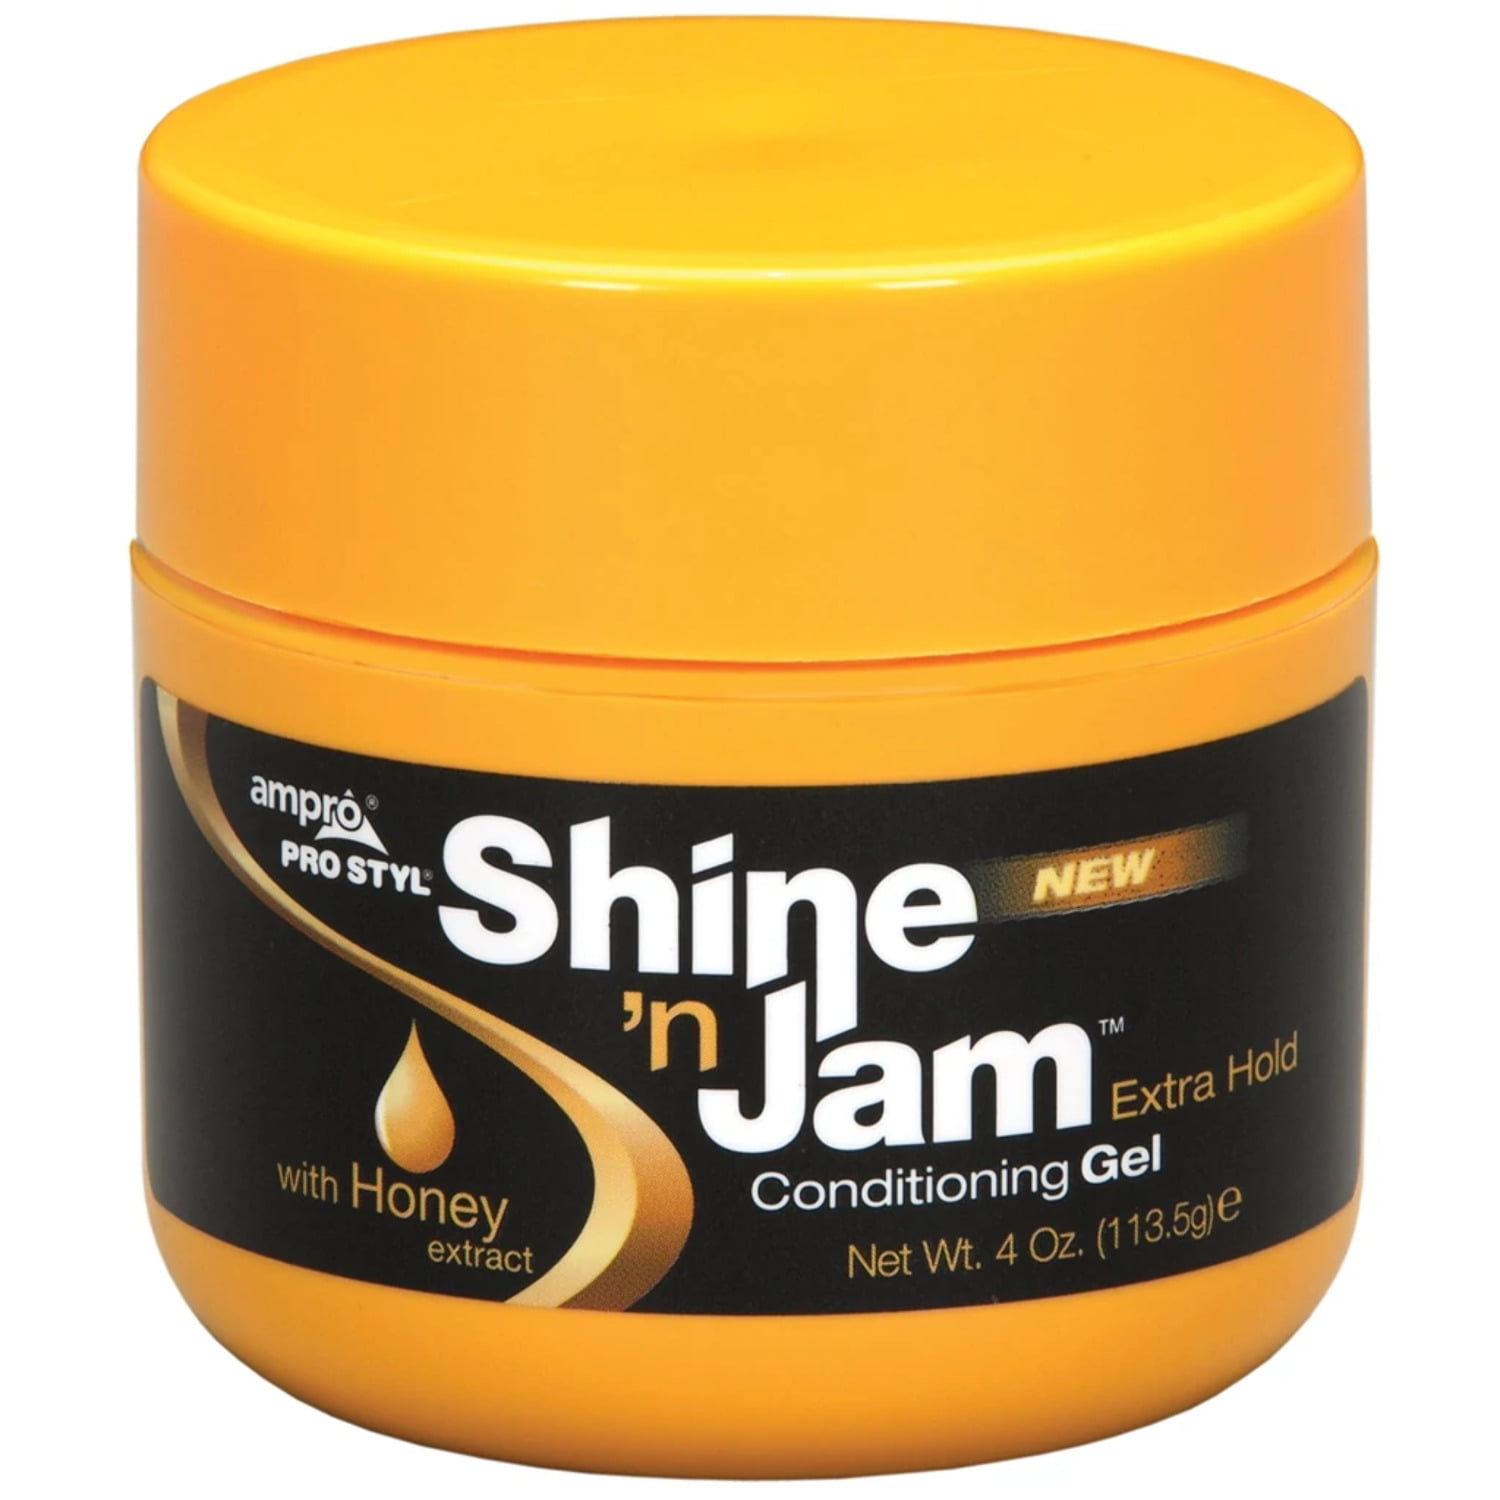 red shine jam conditioning gel braid